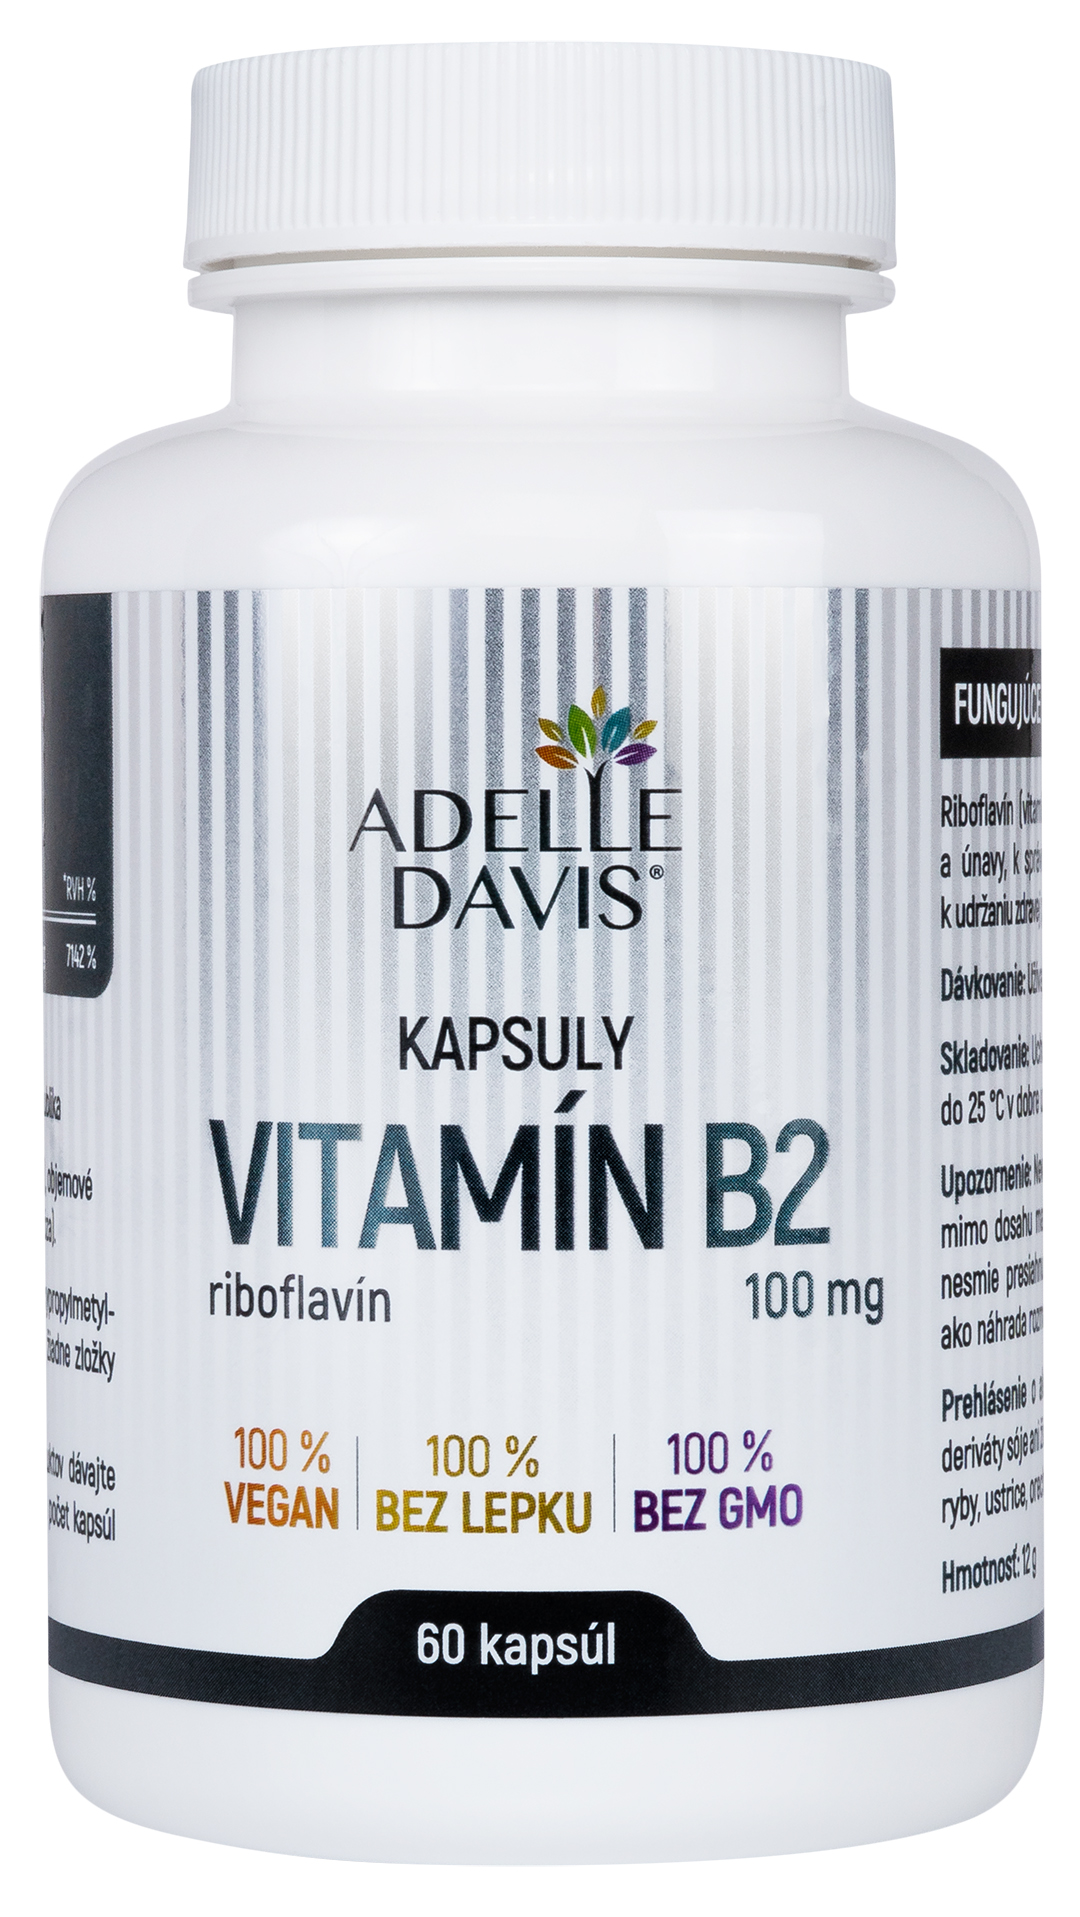 Adelle Davis - Vitamin B2 (Riboflavin) 100 mg, 60 kapslí